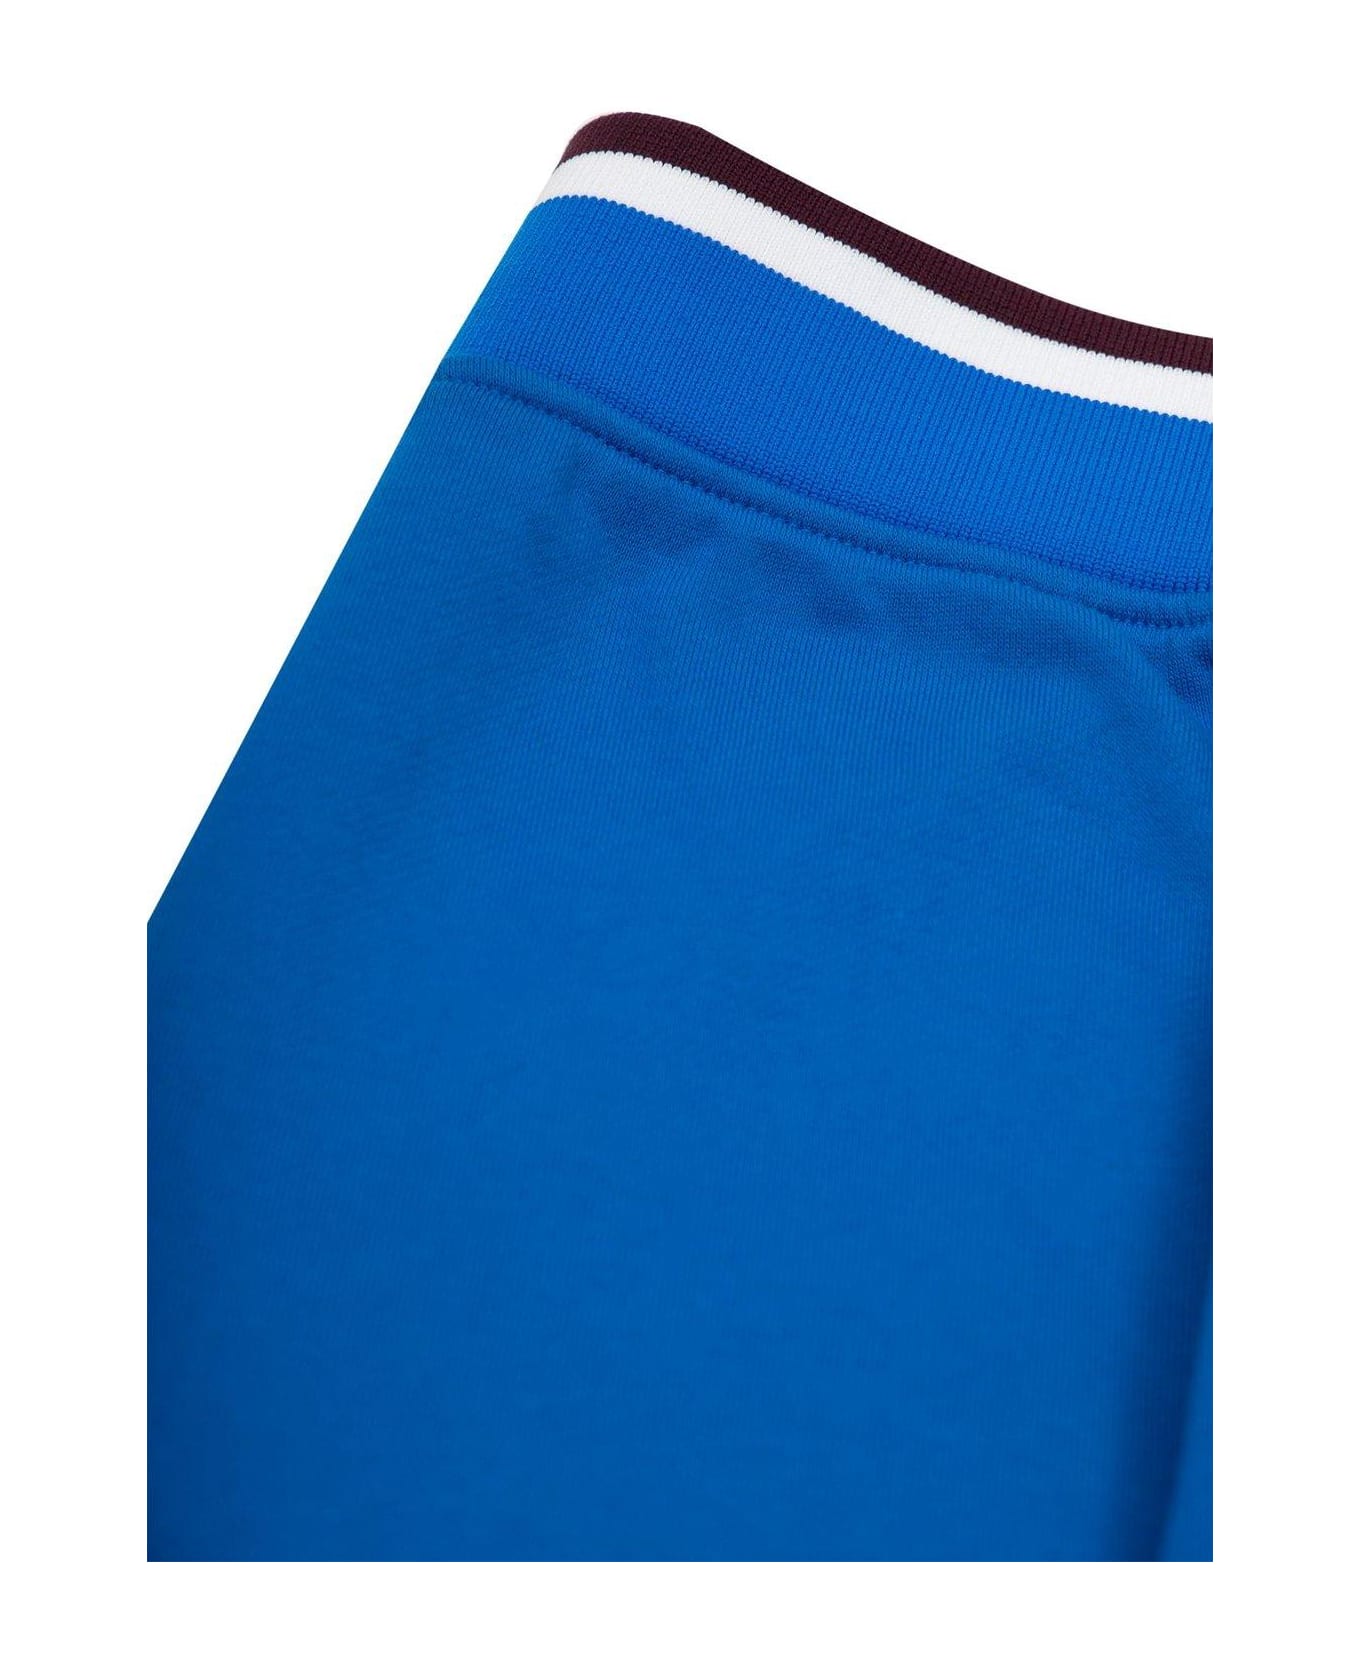 Burberry Logo Printed Sweatpants - BLUE ボトムス